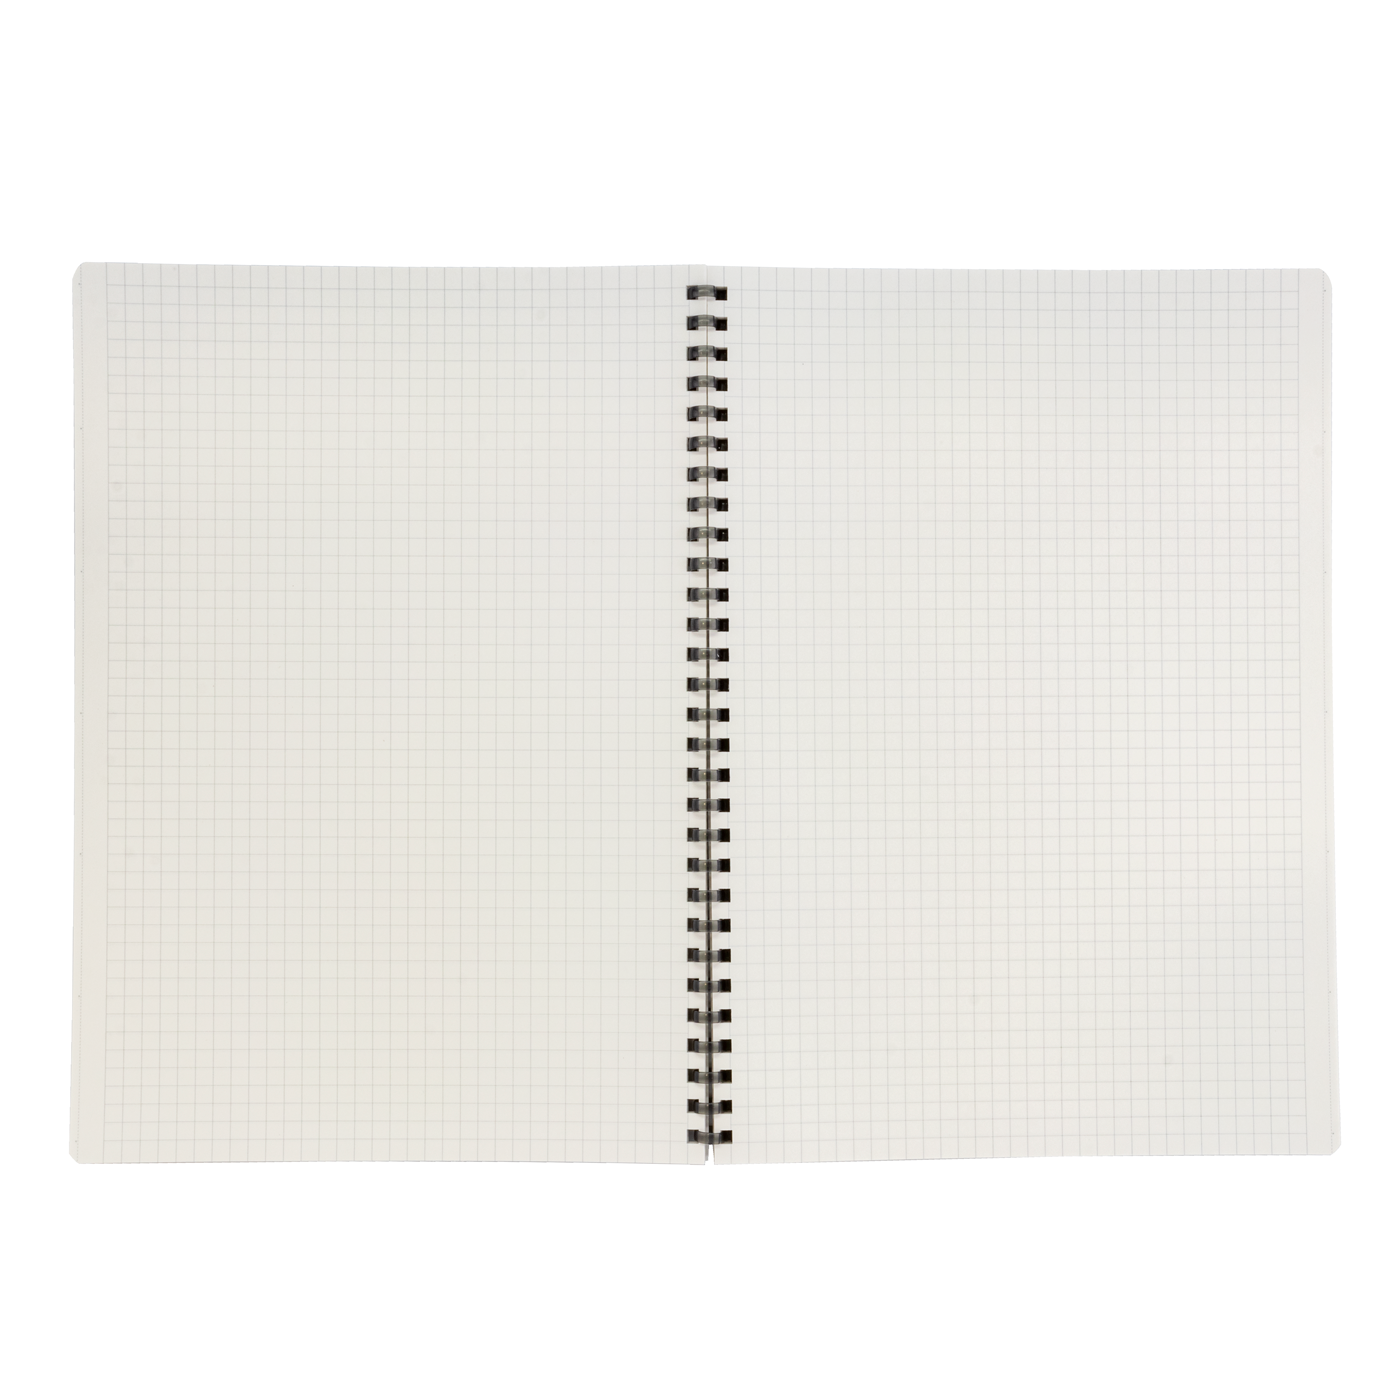 Kokuyo Soft Ring Notebook Biz - A5-50 Sheets - 5 Mm Grid - Black (Pack of  2) | eBay